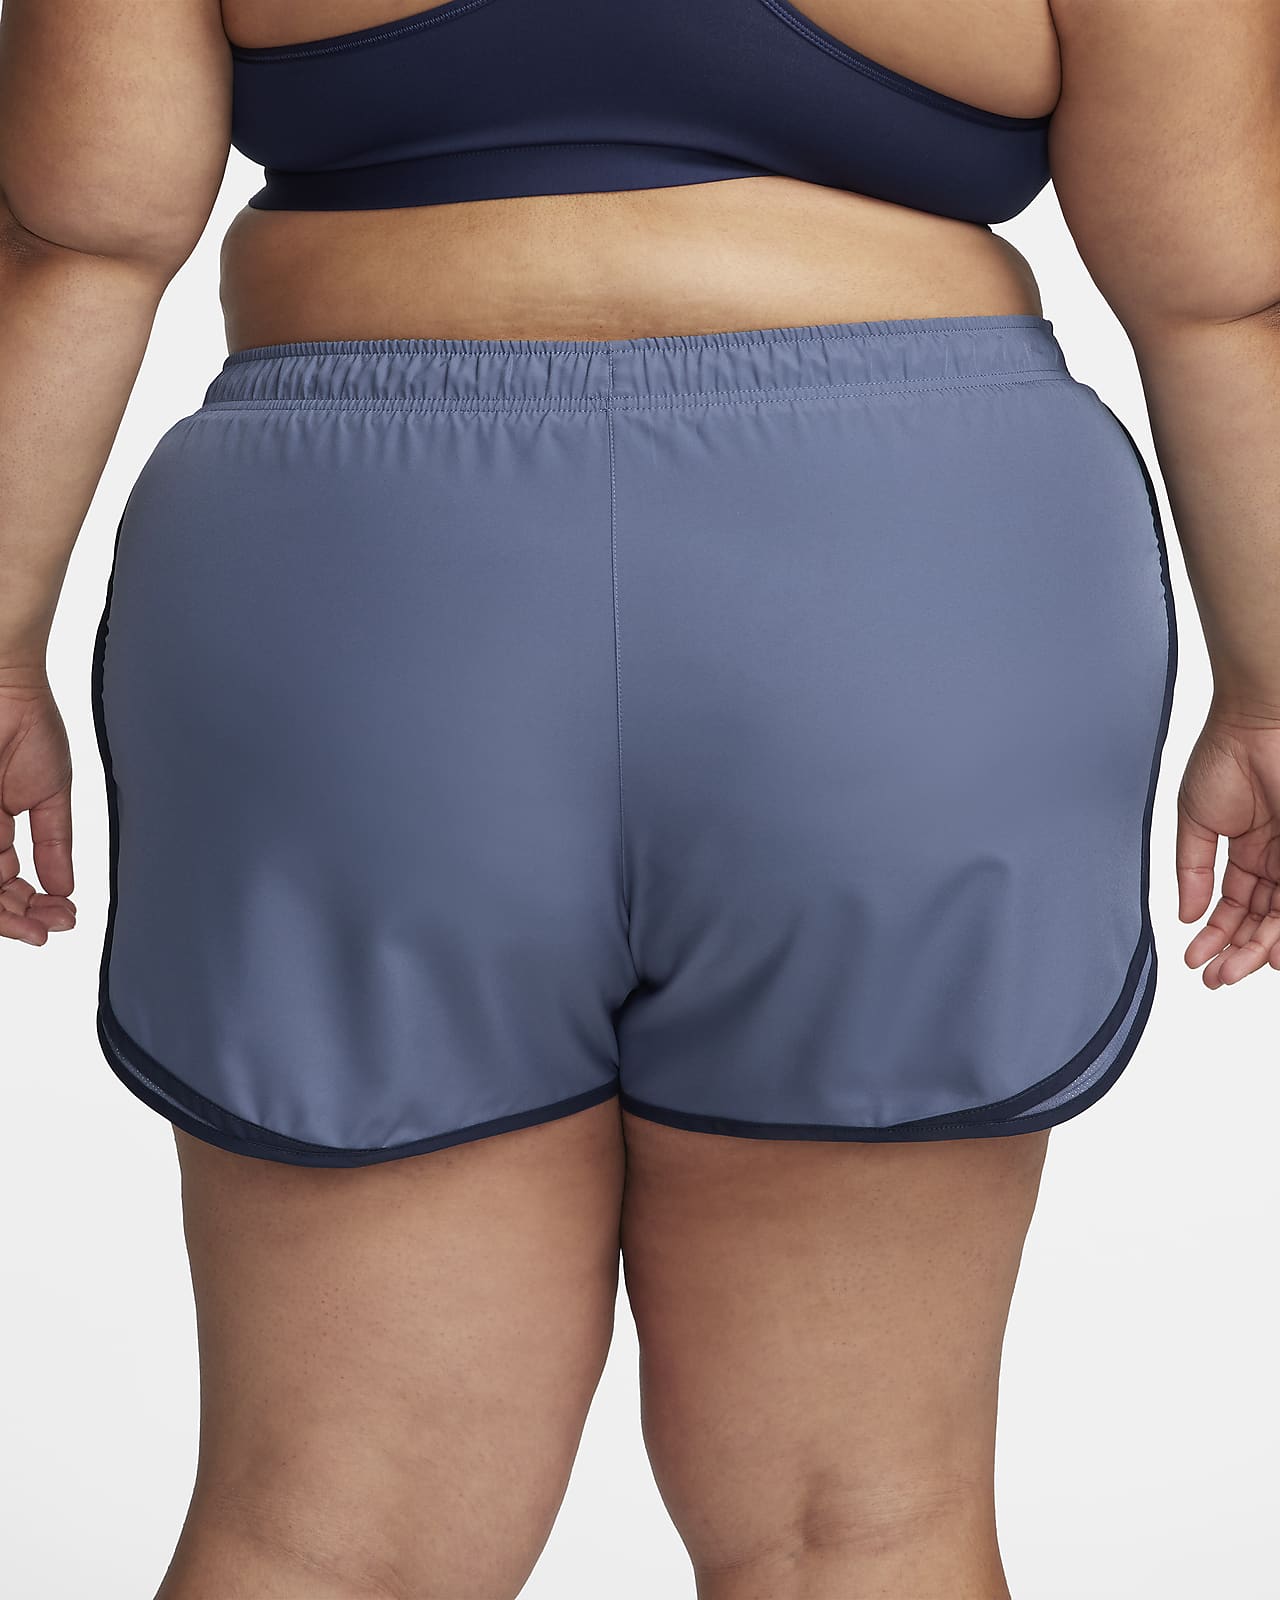 Nike Tempo Women's Running Shorts (Plus Size)